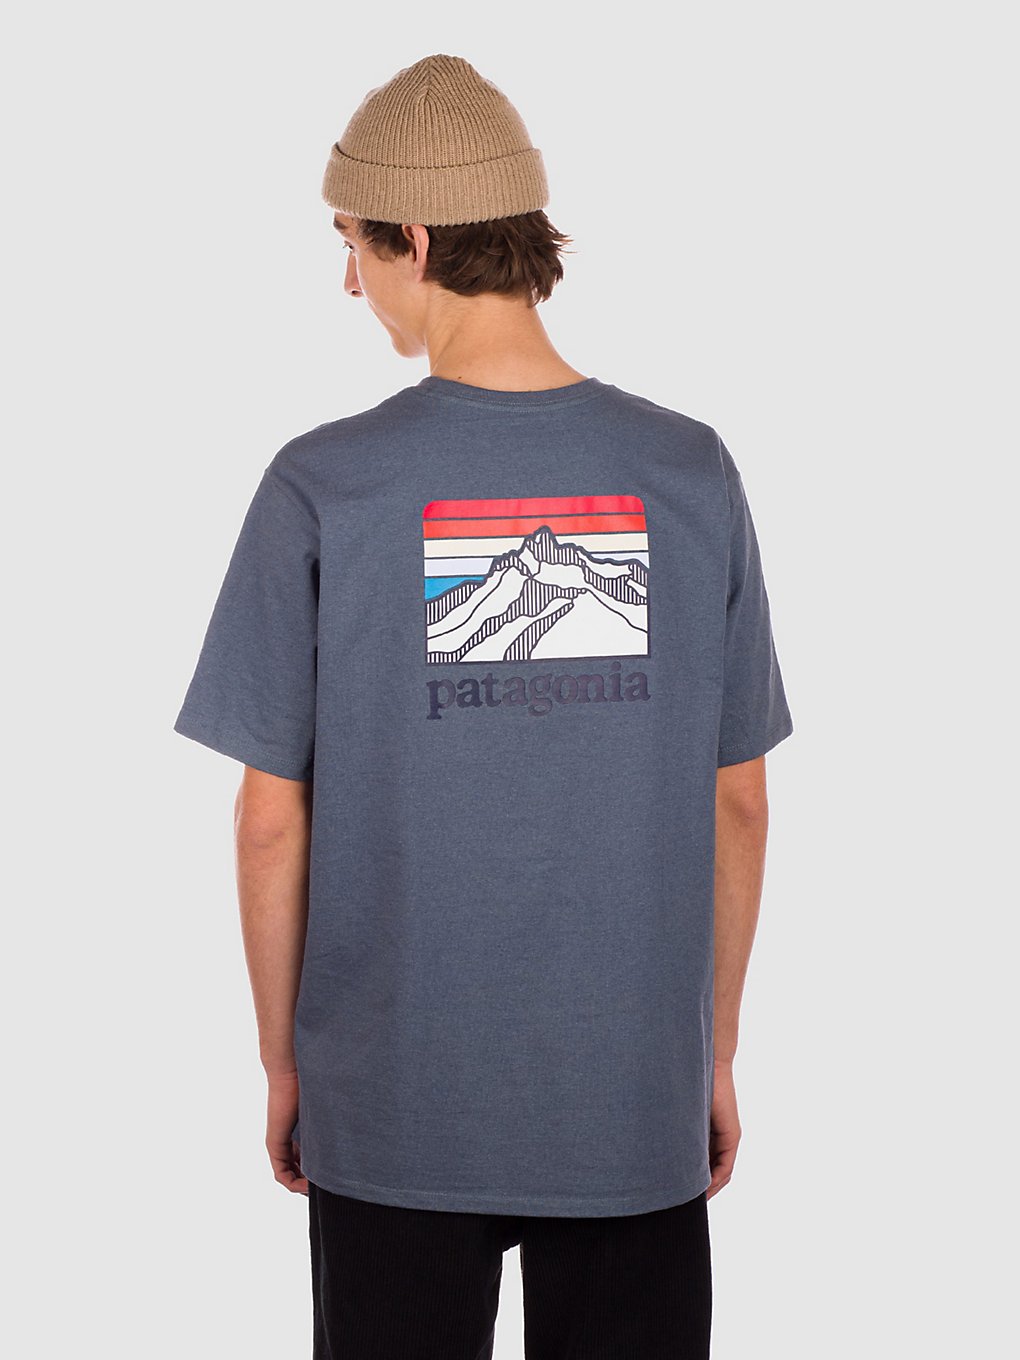 Patagonia Line Logo Ridge Pocket Responsib T-Shirt plume grey